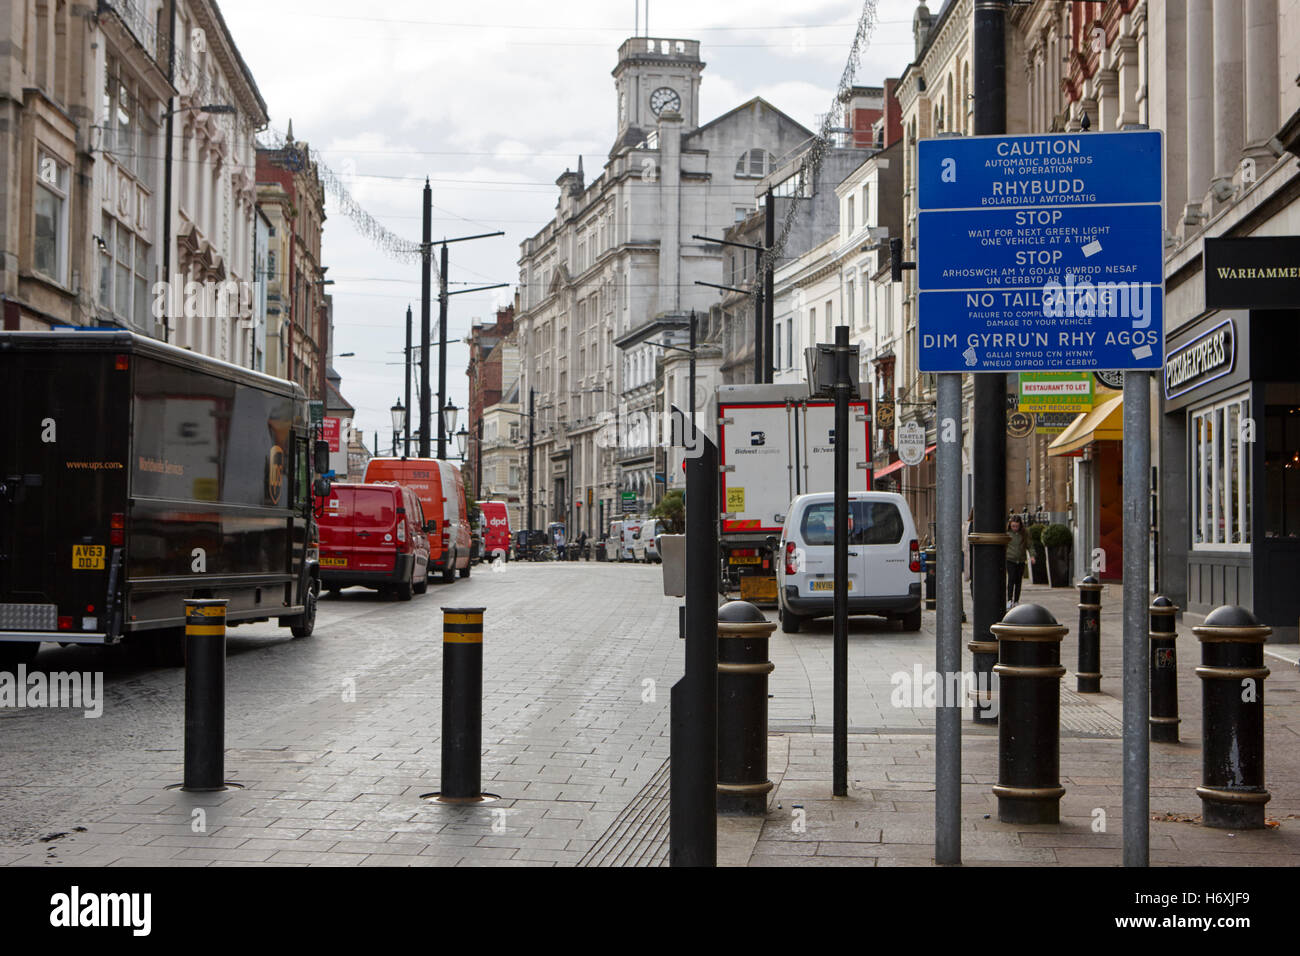 automatic traffic bollards in Cardiff high street city centre precinct Wales United Kingdom Stock Photo